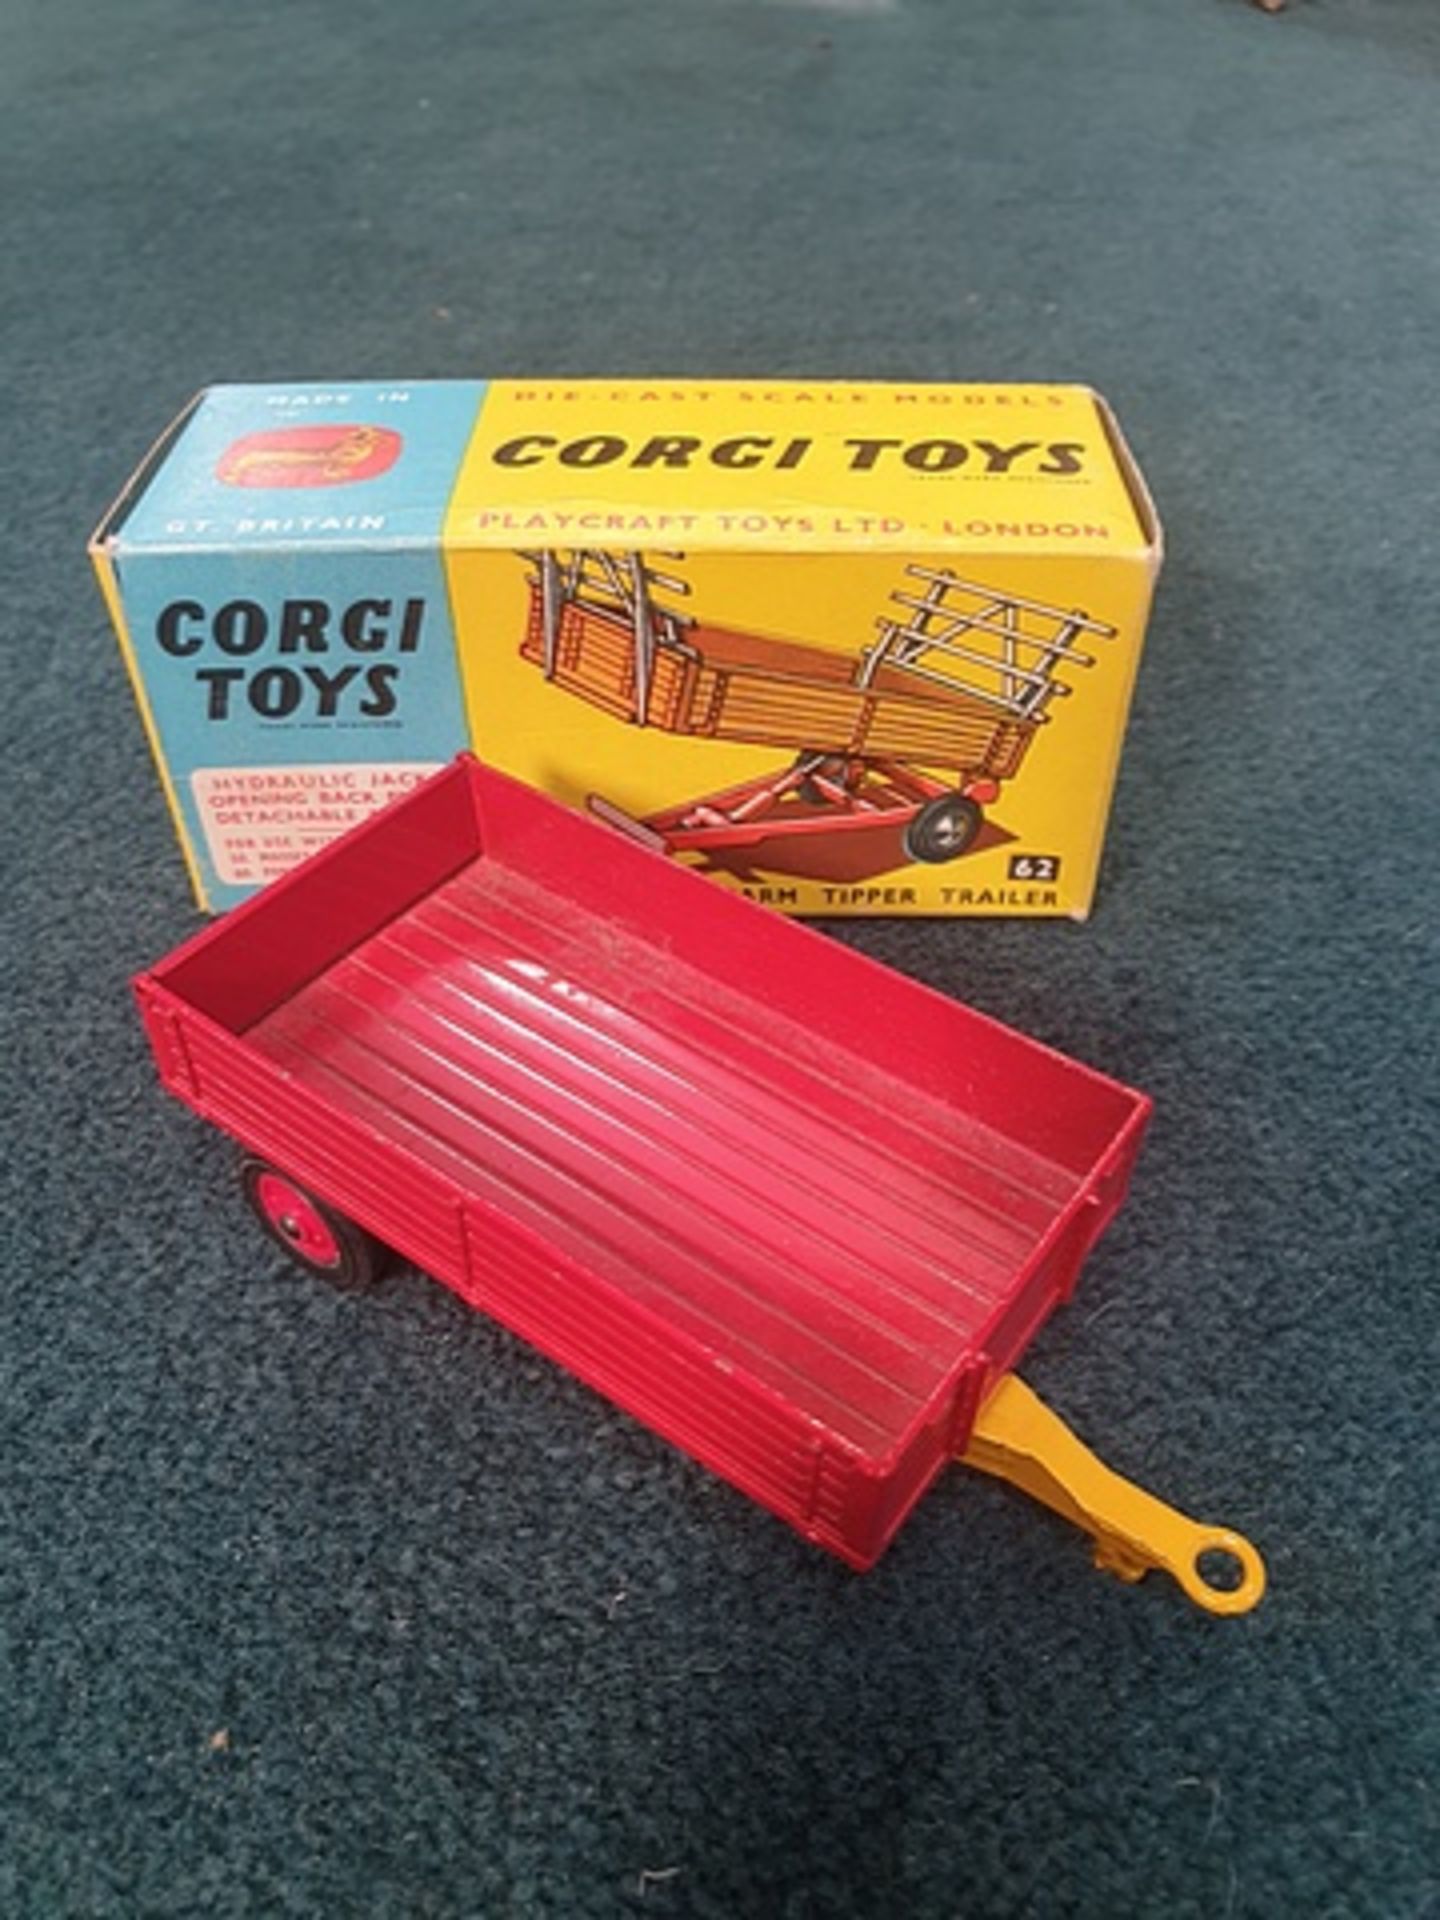 Corgi Toys # 62 Farm Tipper Trailer Model in Mint condition in near mint box